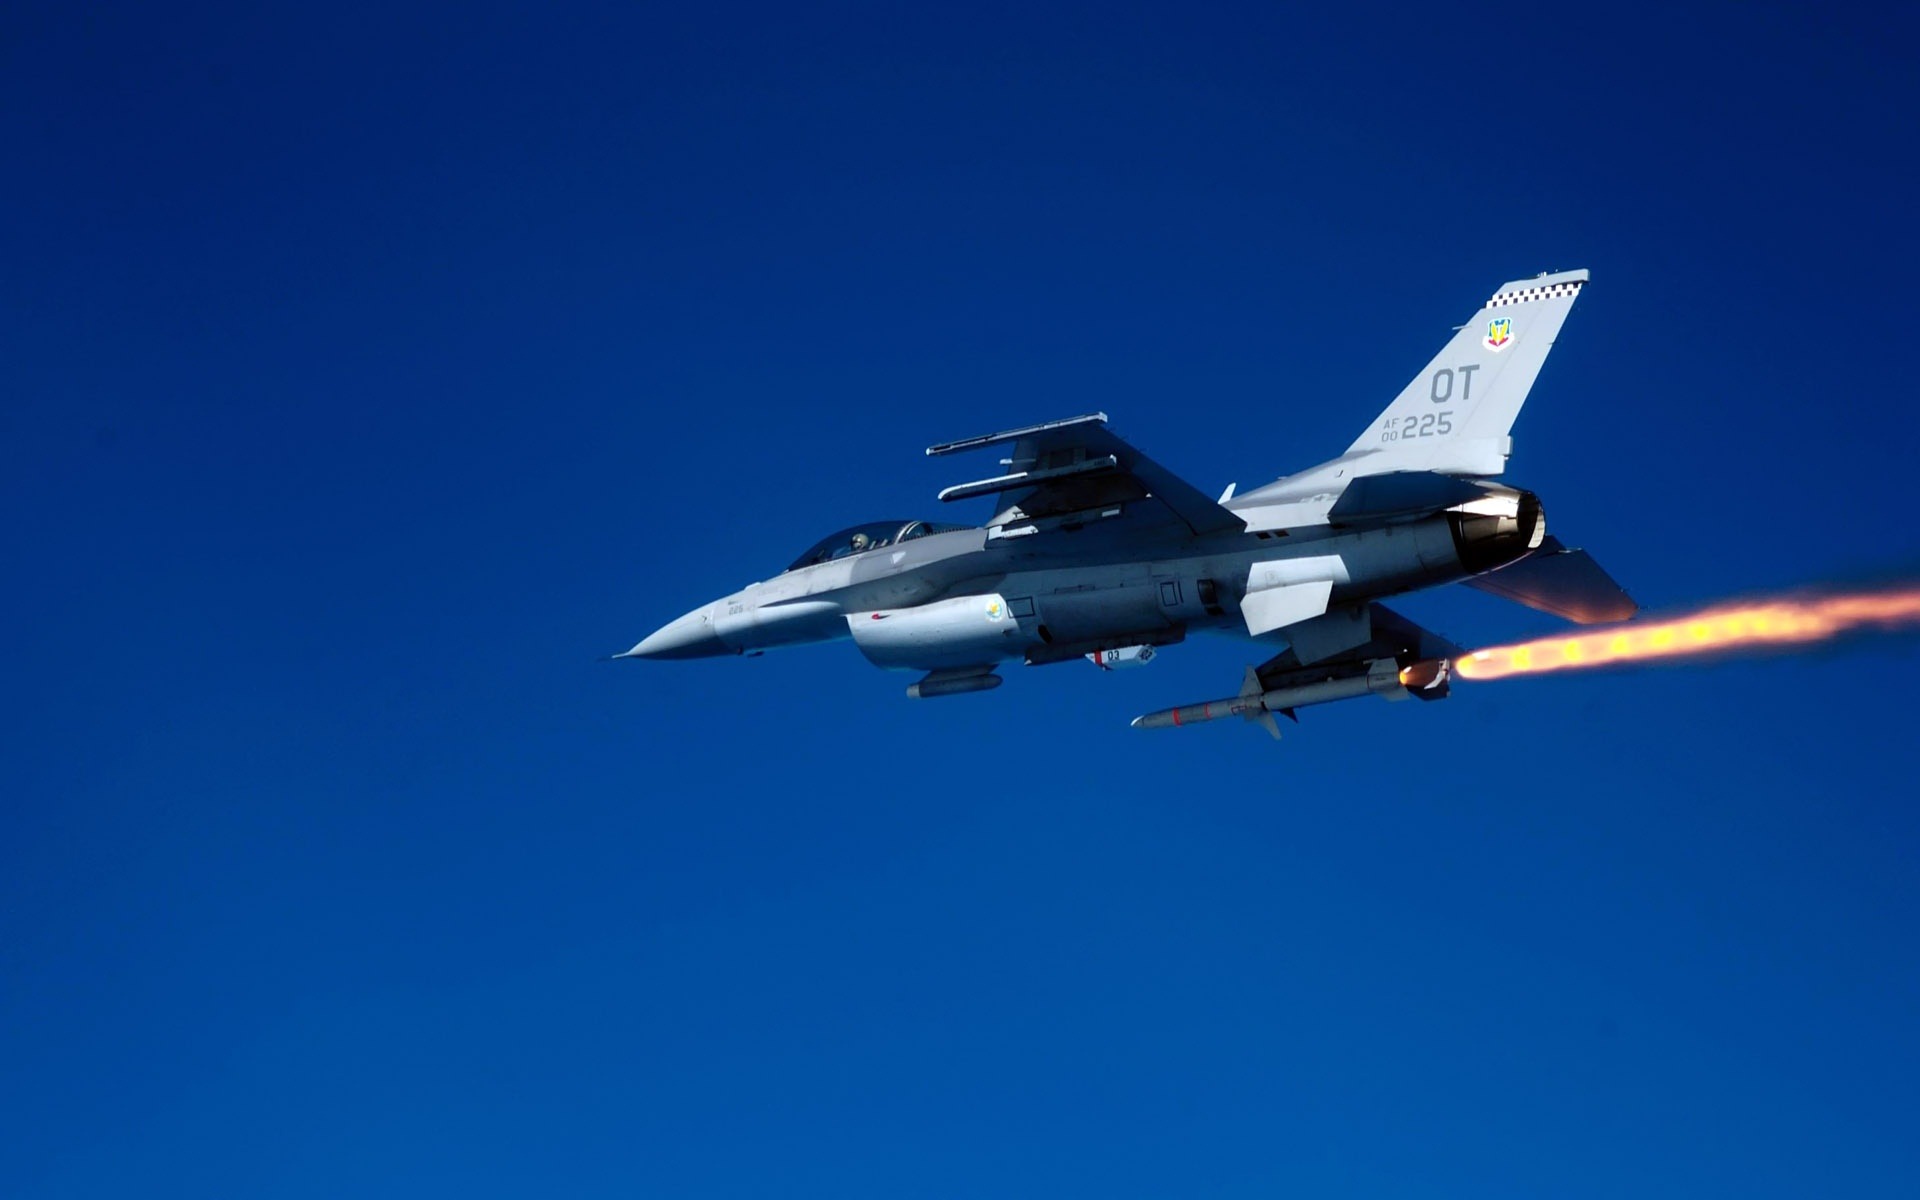 Descarga gratuita de fondo de pantalla para móvil de Militar, General Dynamics F 16 Fighting Falcon.